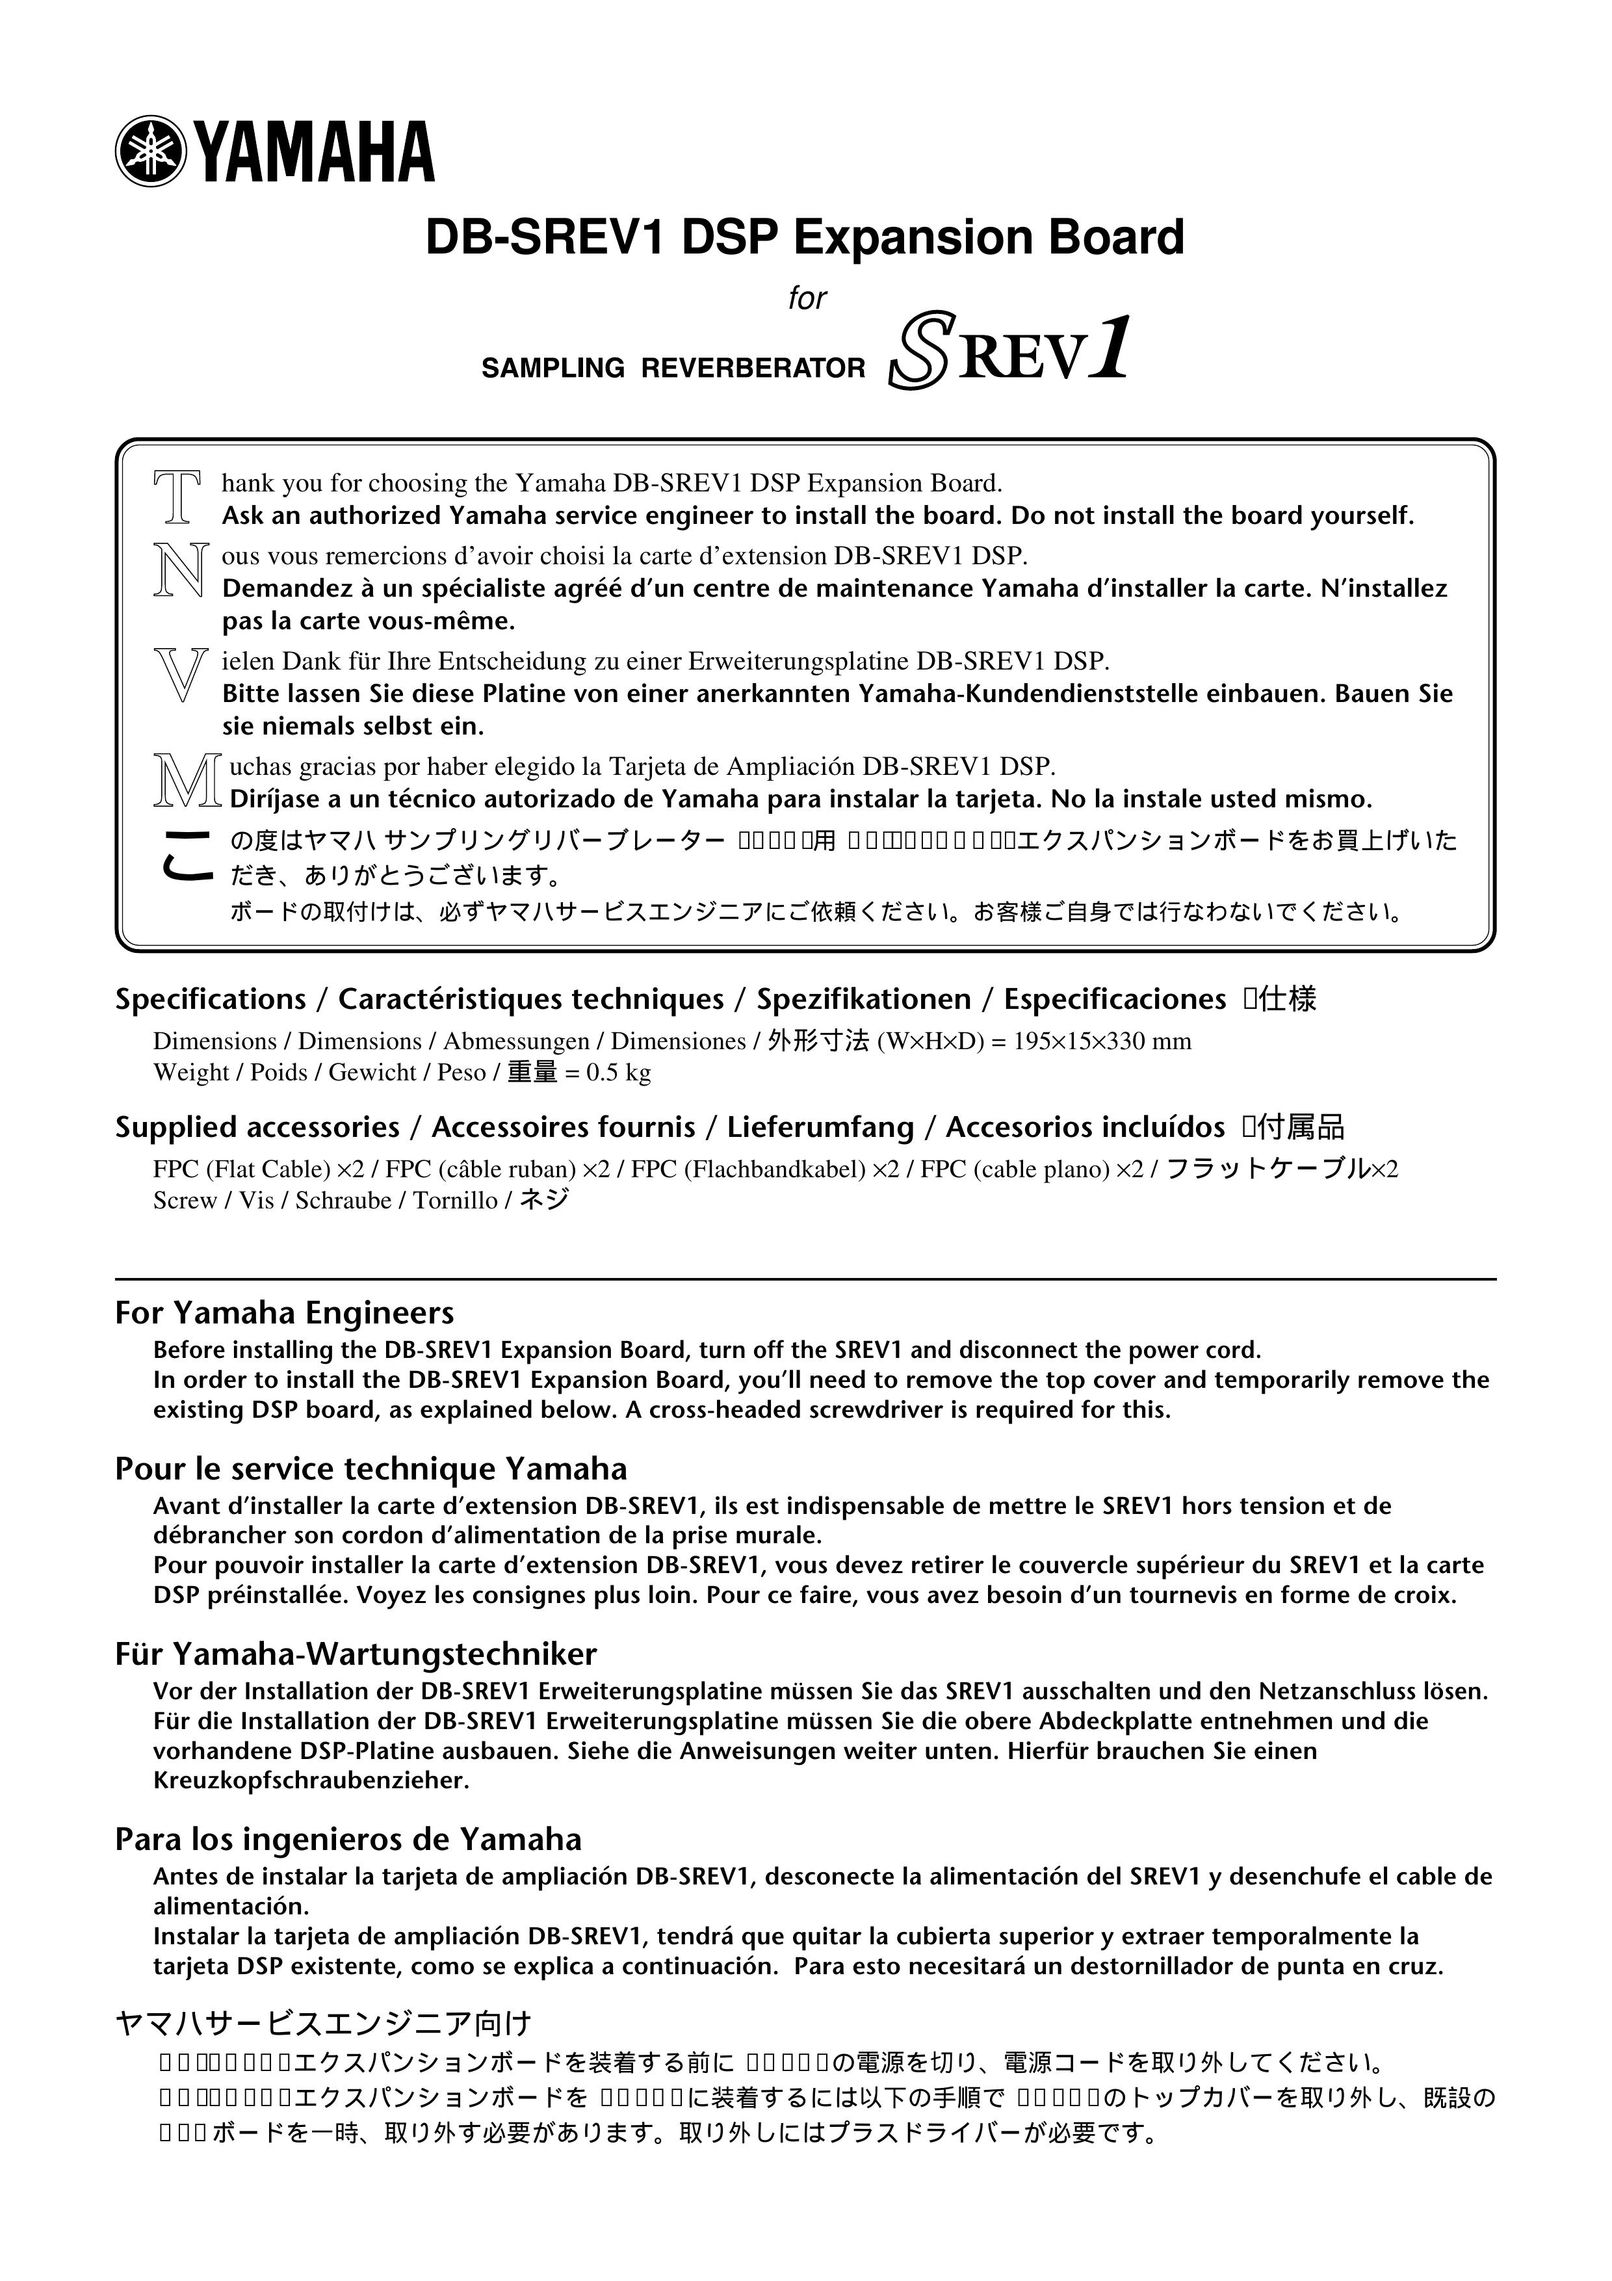 Yamaha DB-SREV1 Network Card User Manual